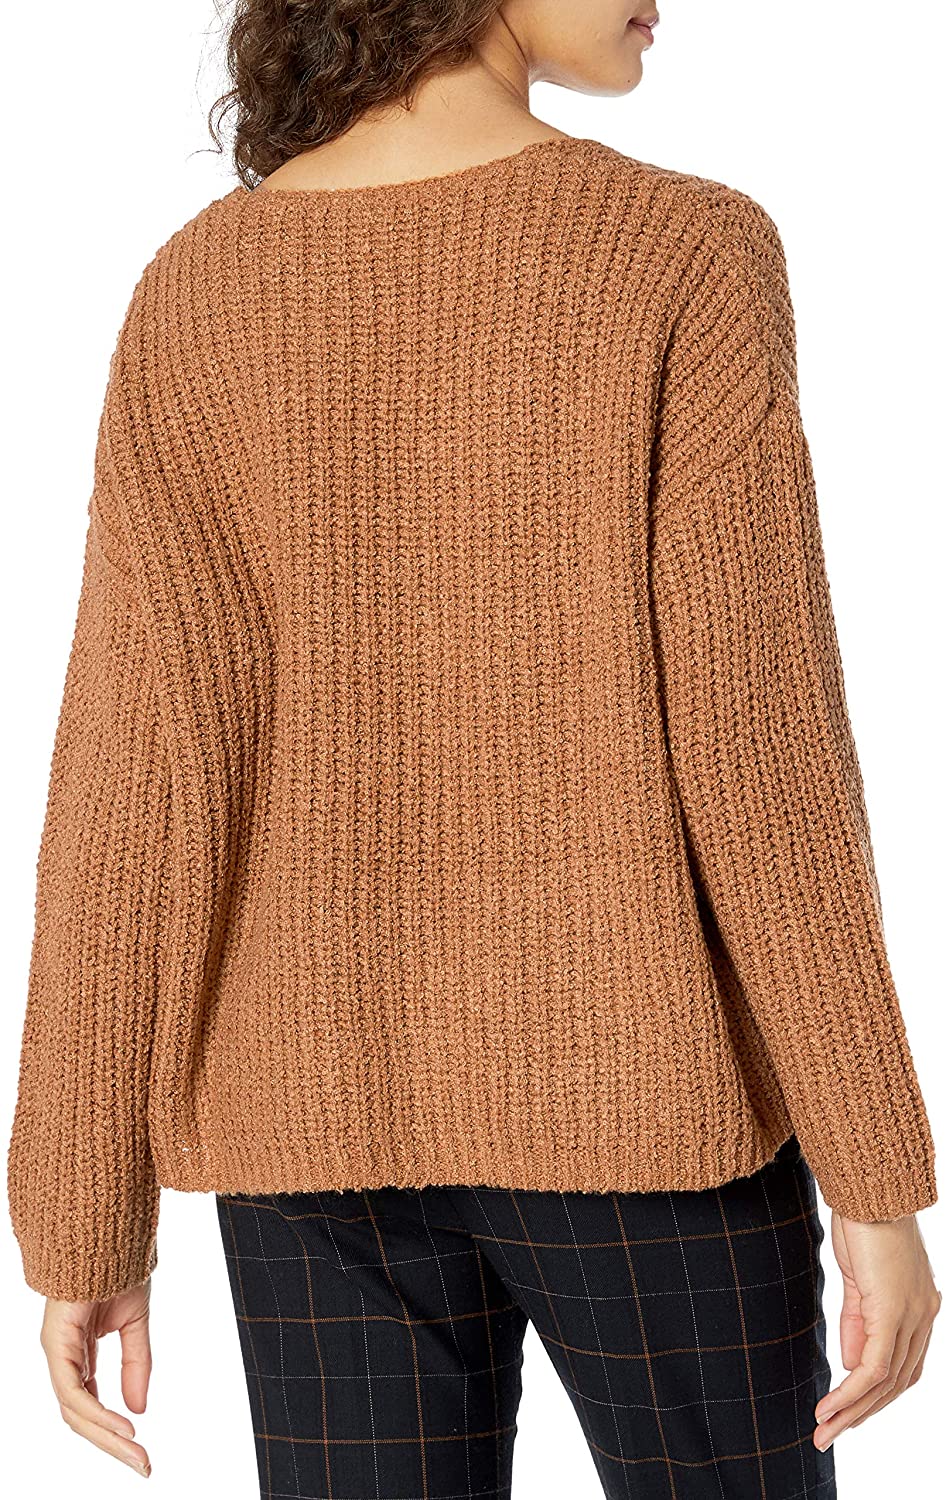 Rip Curl Women's Woven V Neck Sweater | eBay